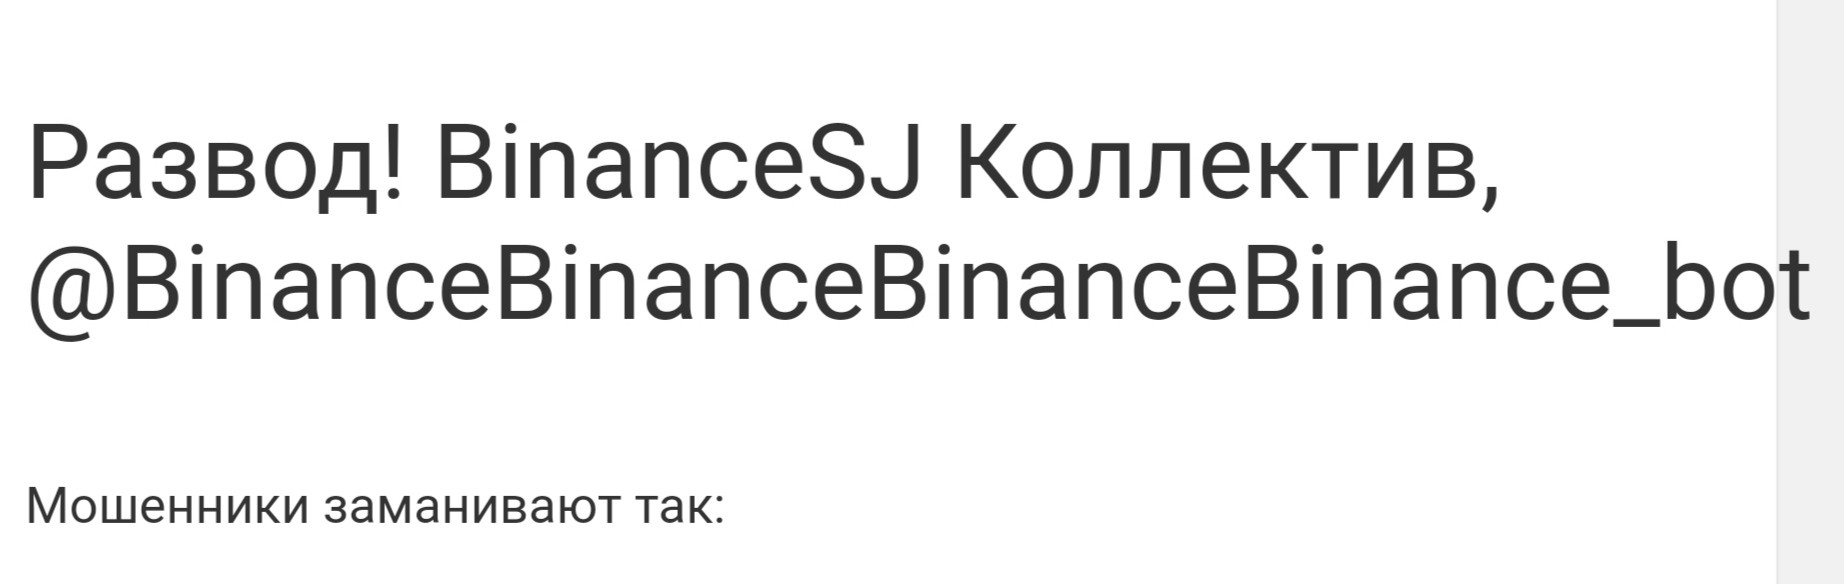 BinanceBinanceBinanceBinance_bot отзывы